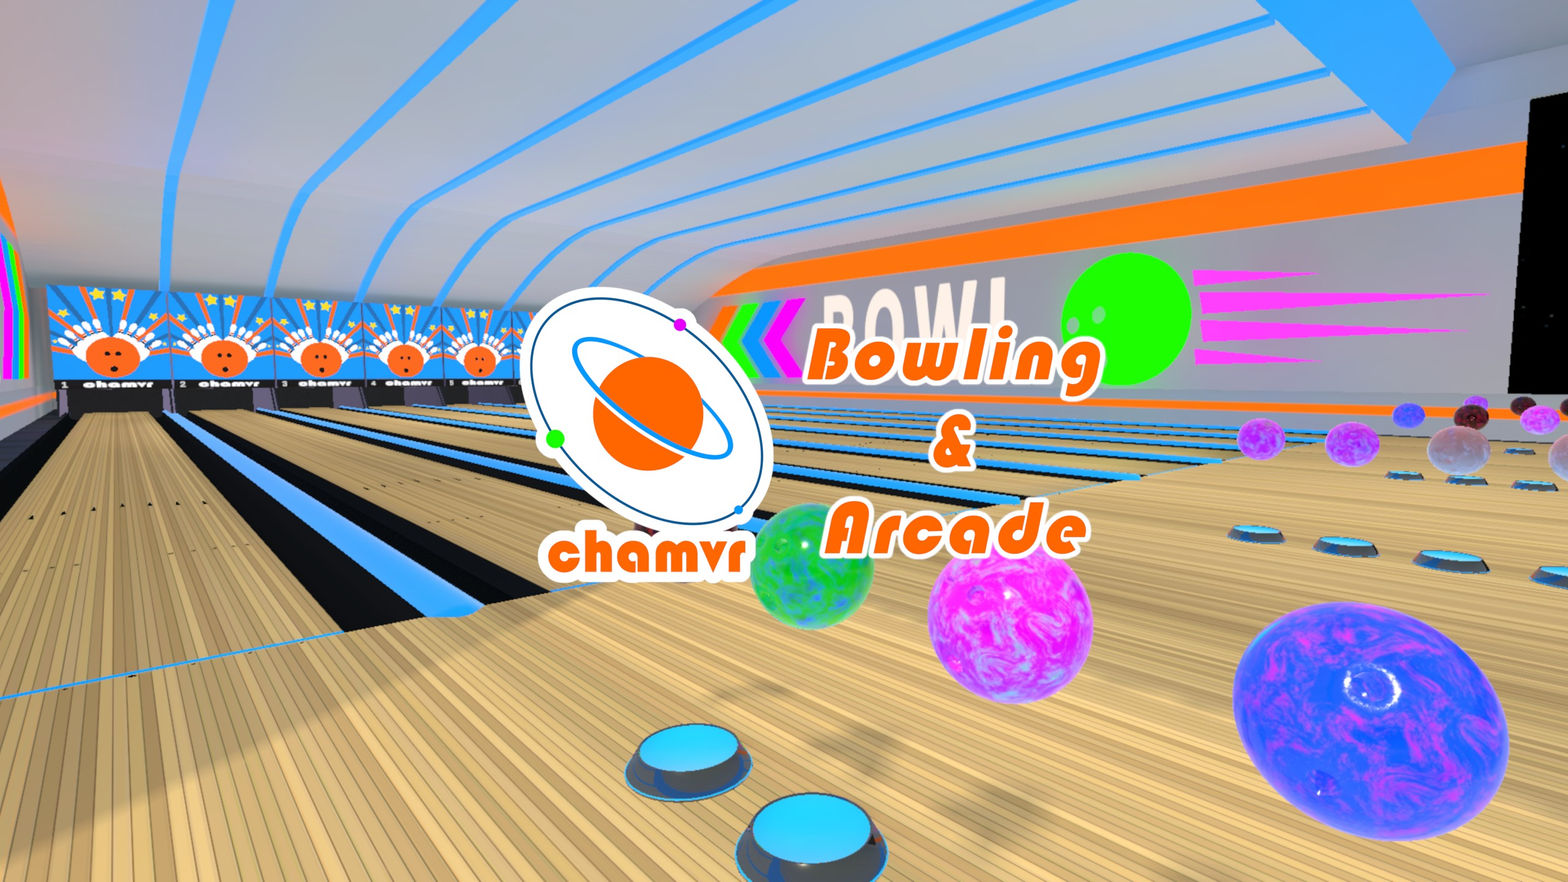 Chamvr | Bowling & Arcade